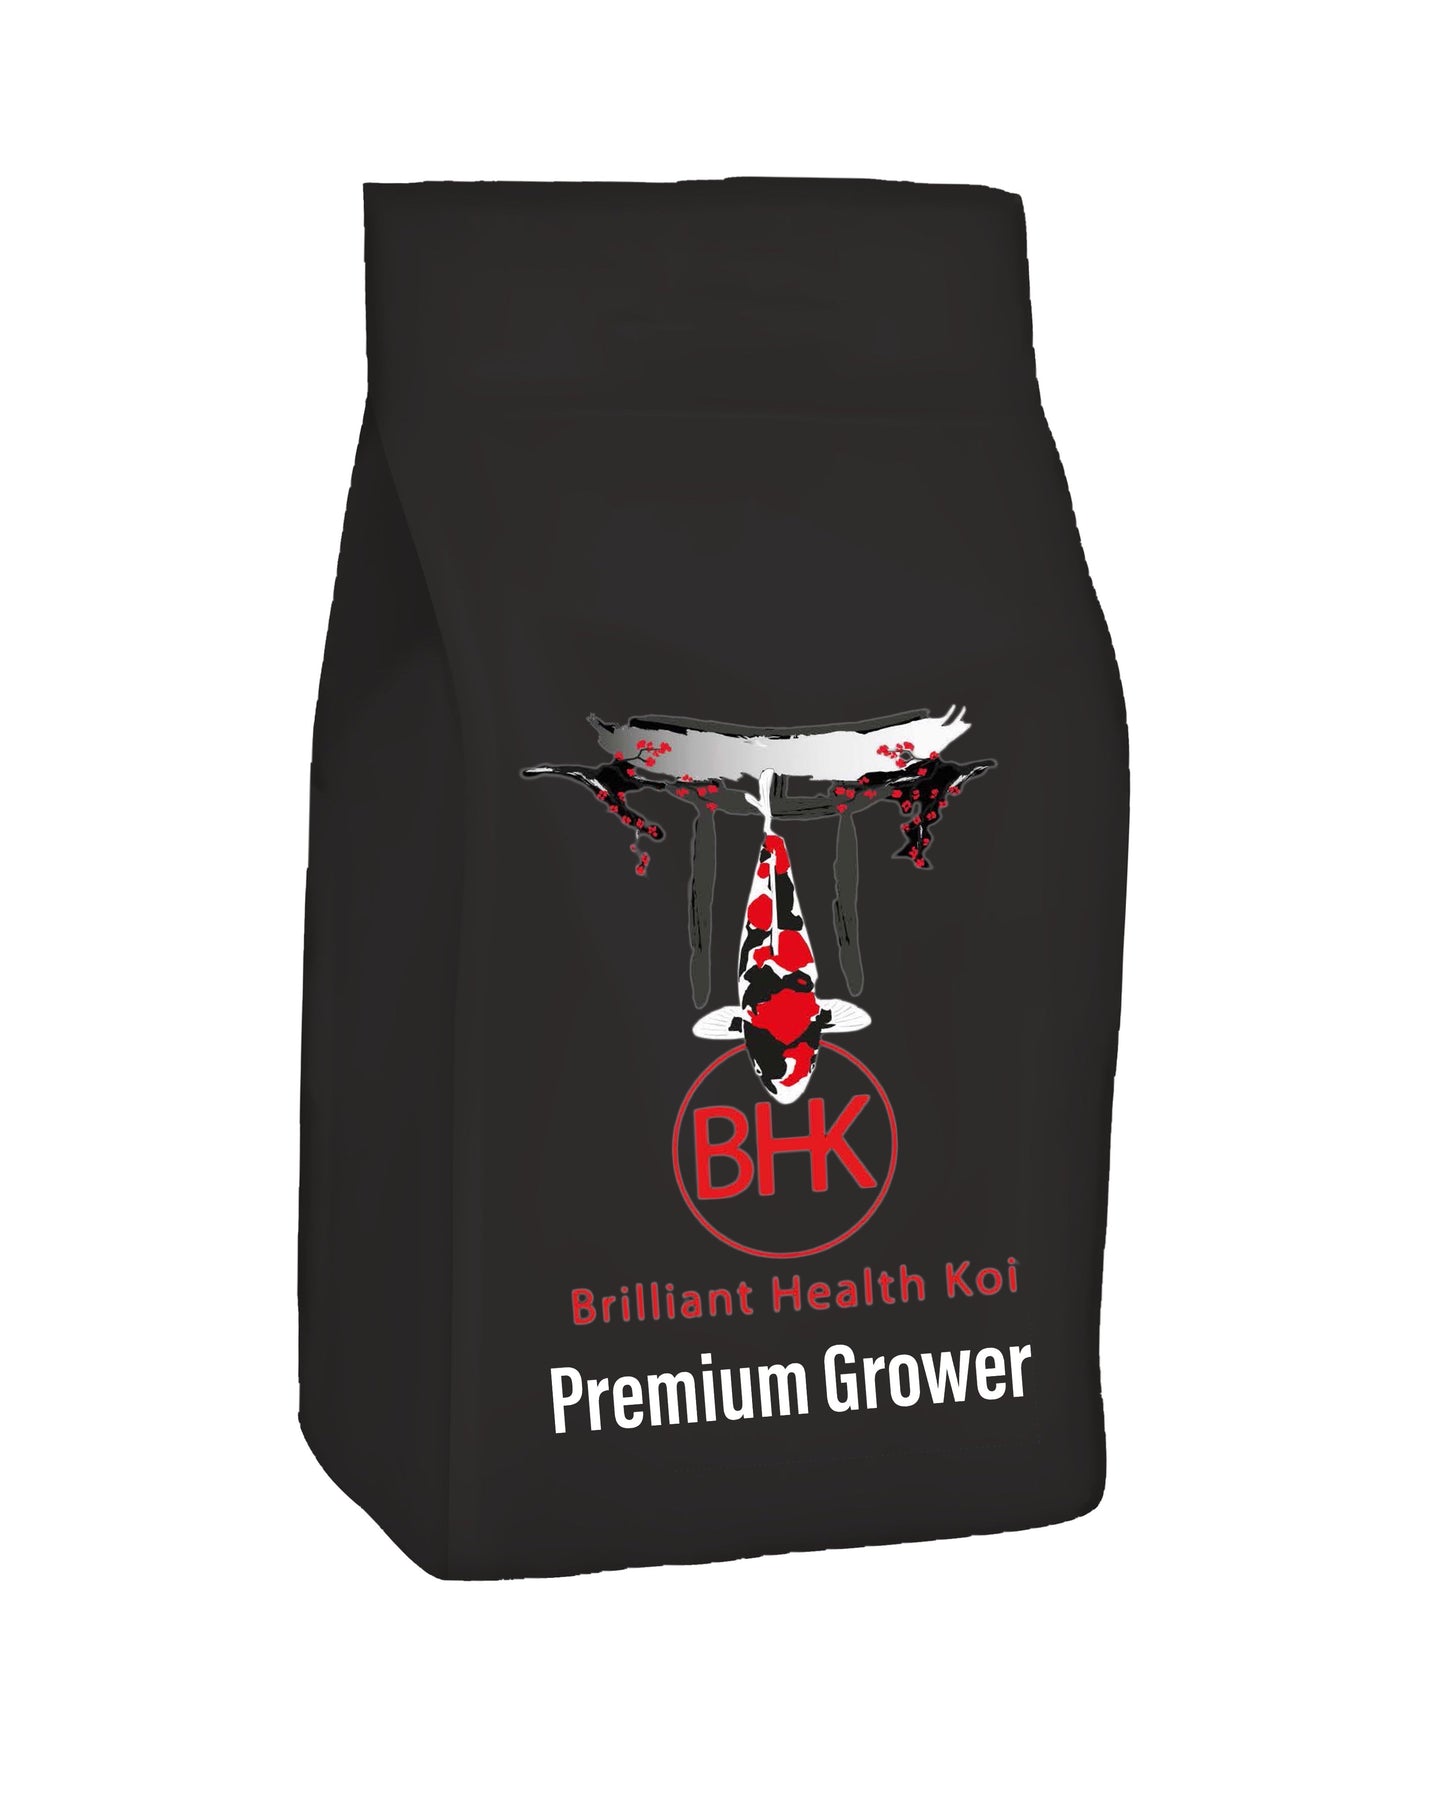 BHK Premium Grower